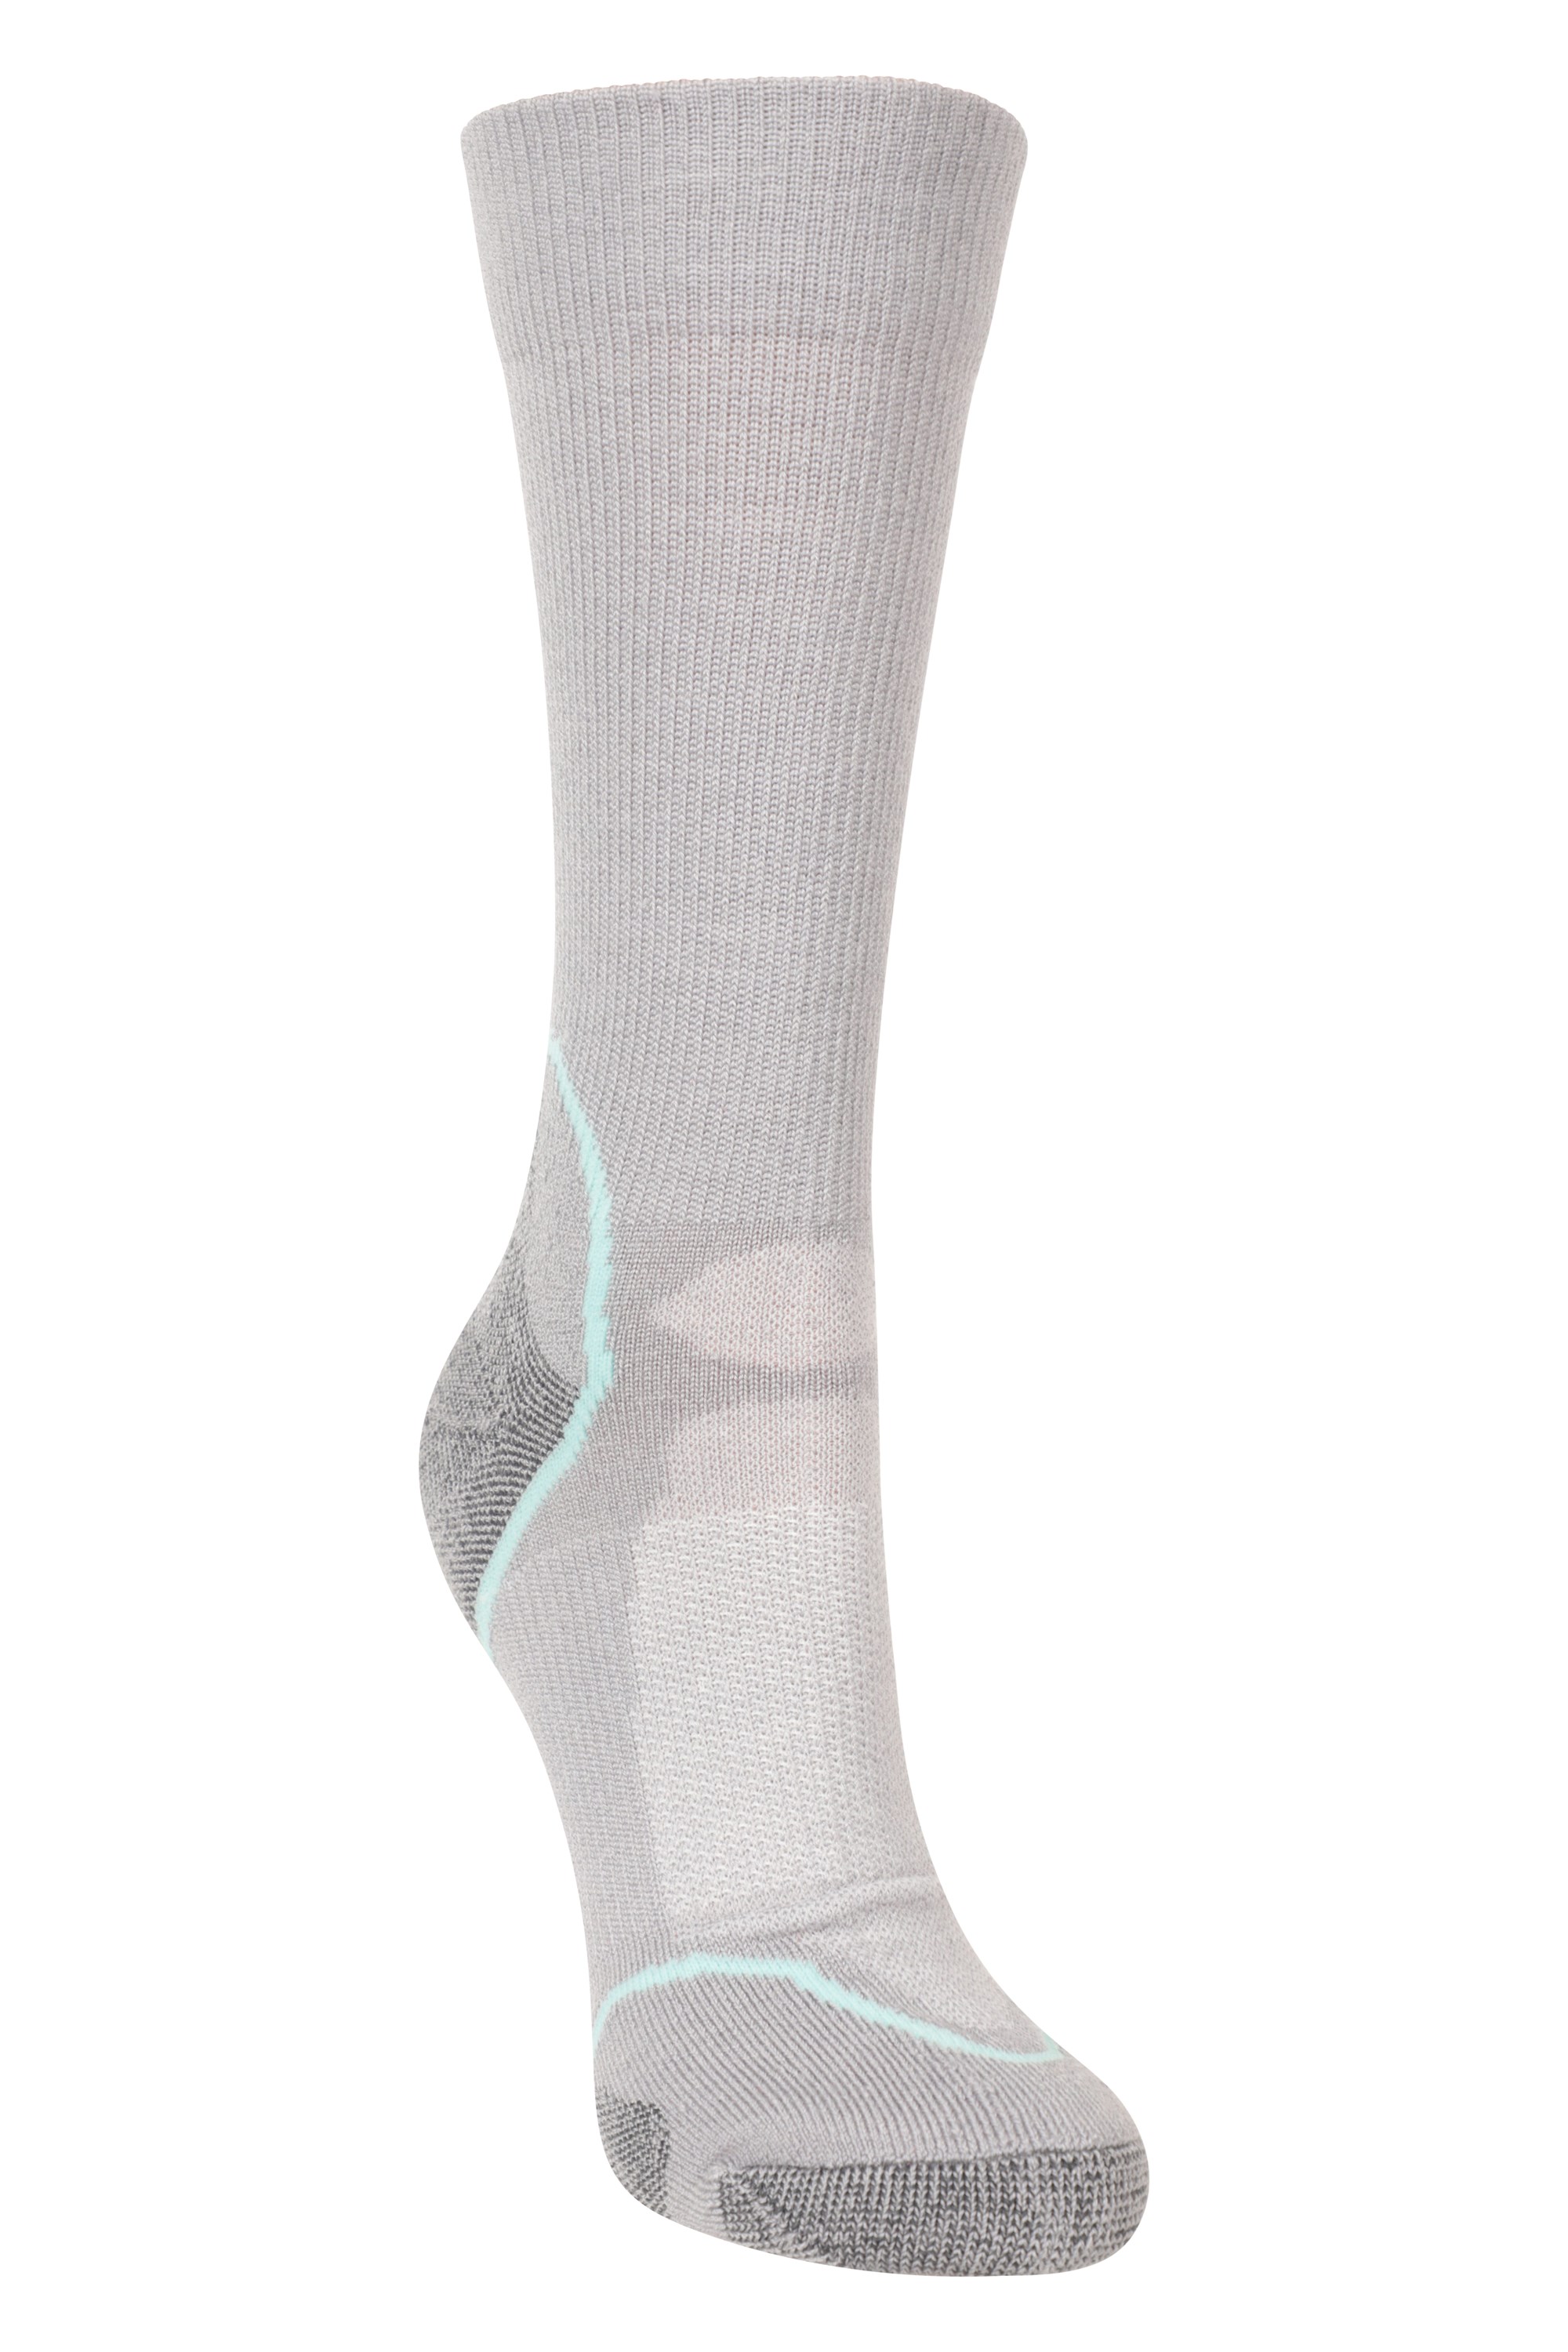 Merino Womens Mid-Calf Hiker Socks - Grey